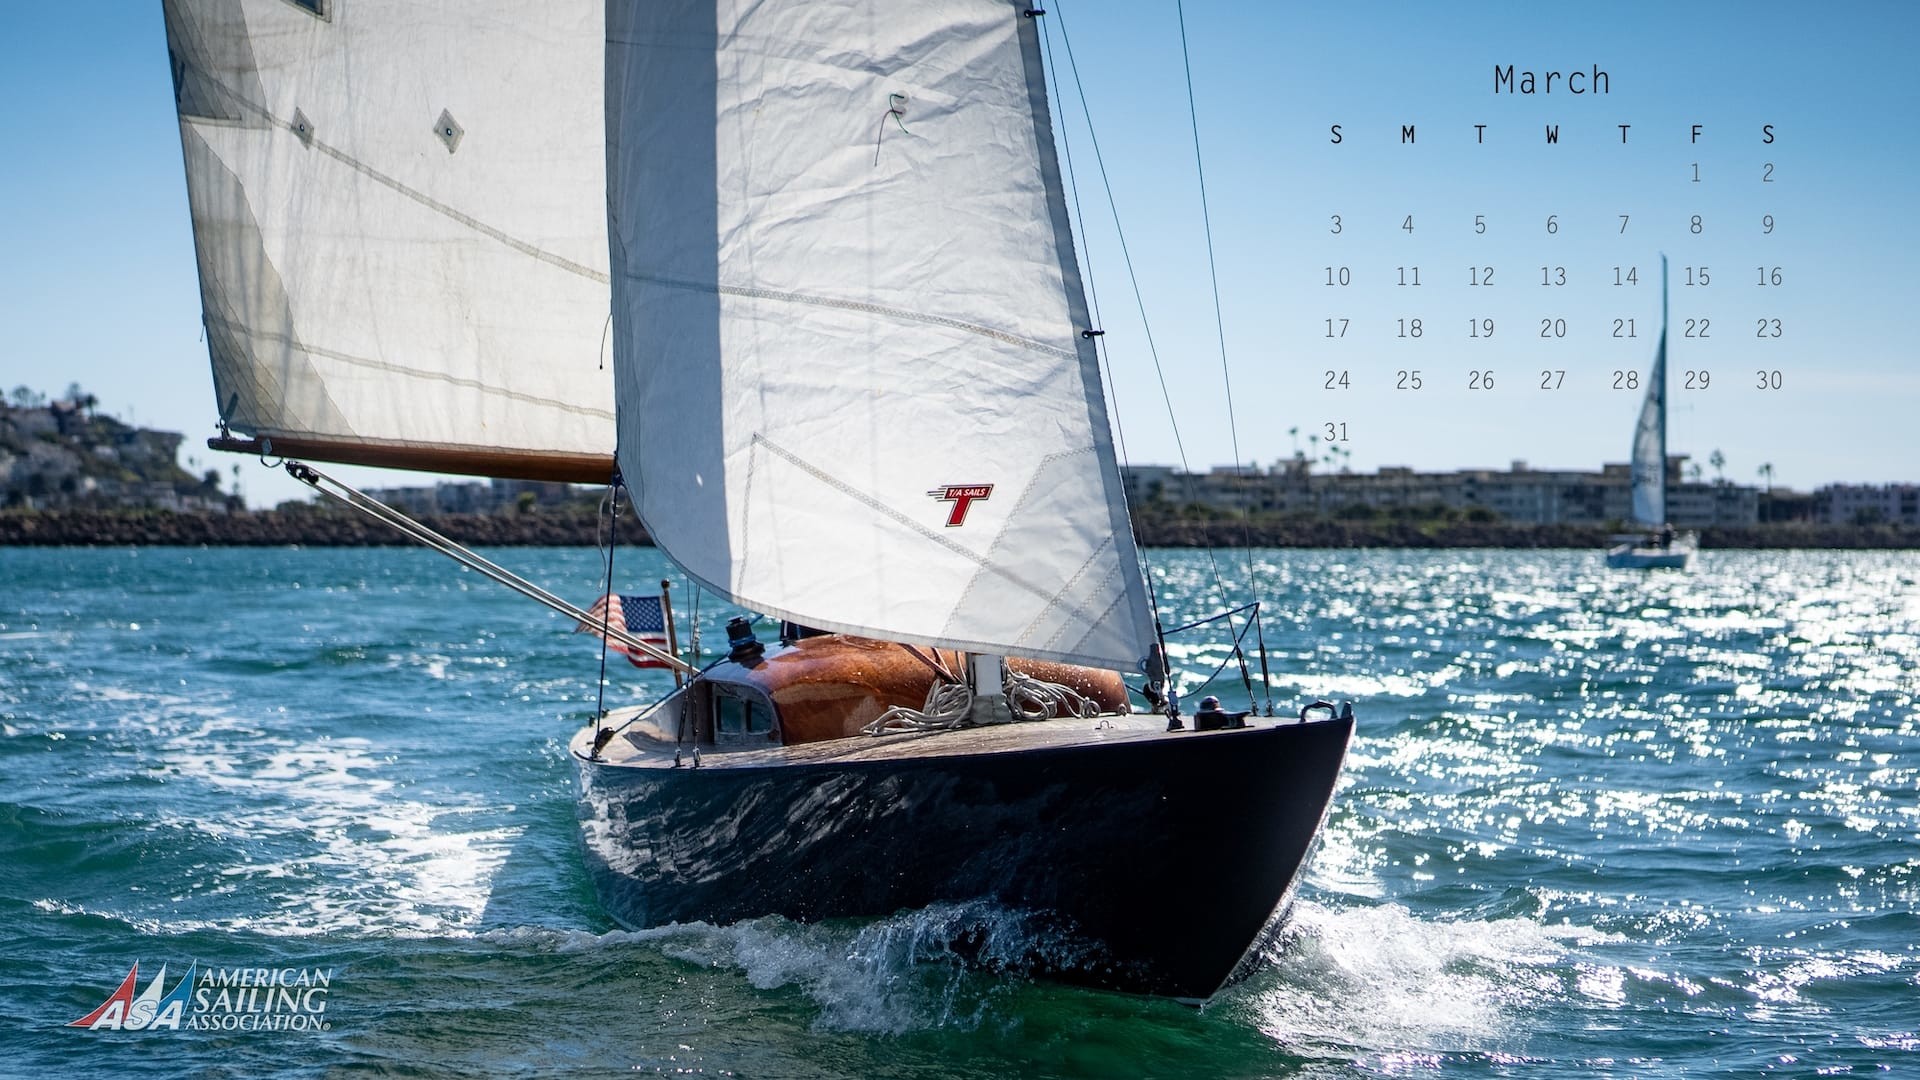 1920x1080 Desktop Wallpaper Sailing Calendar